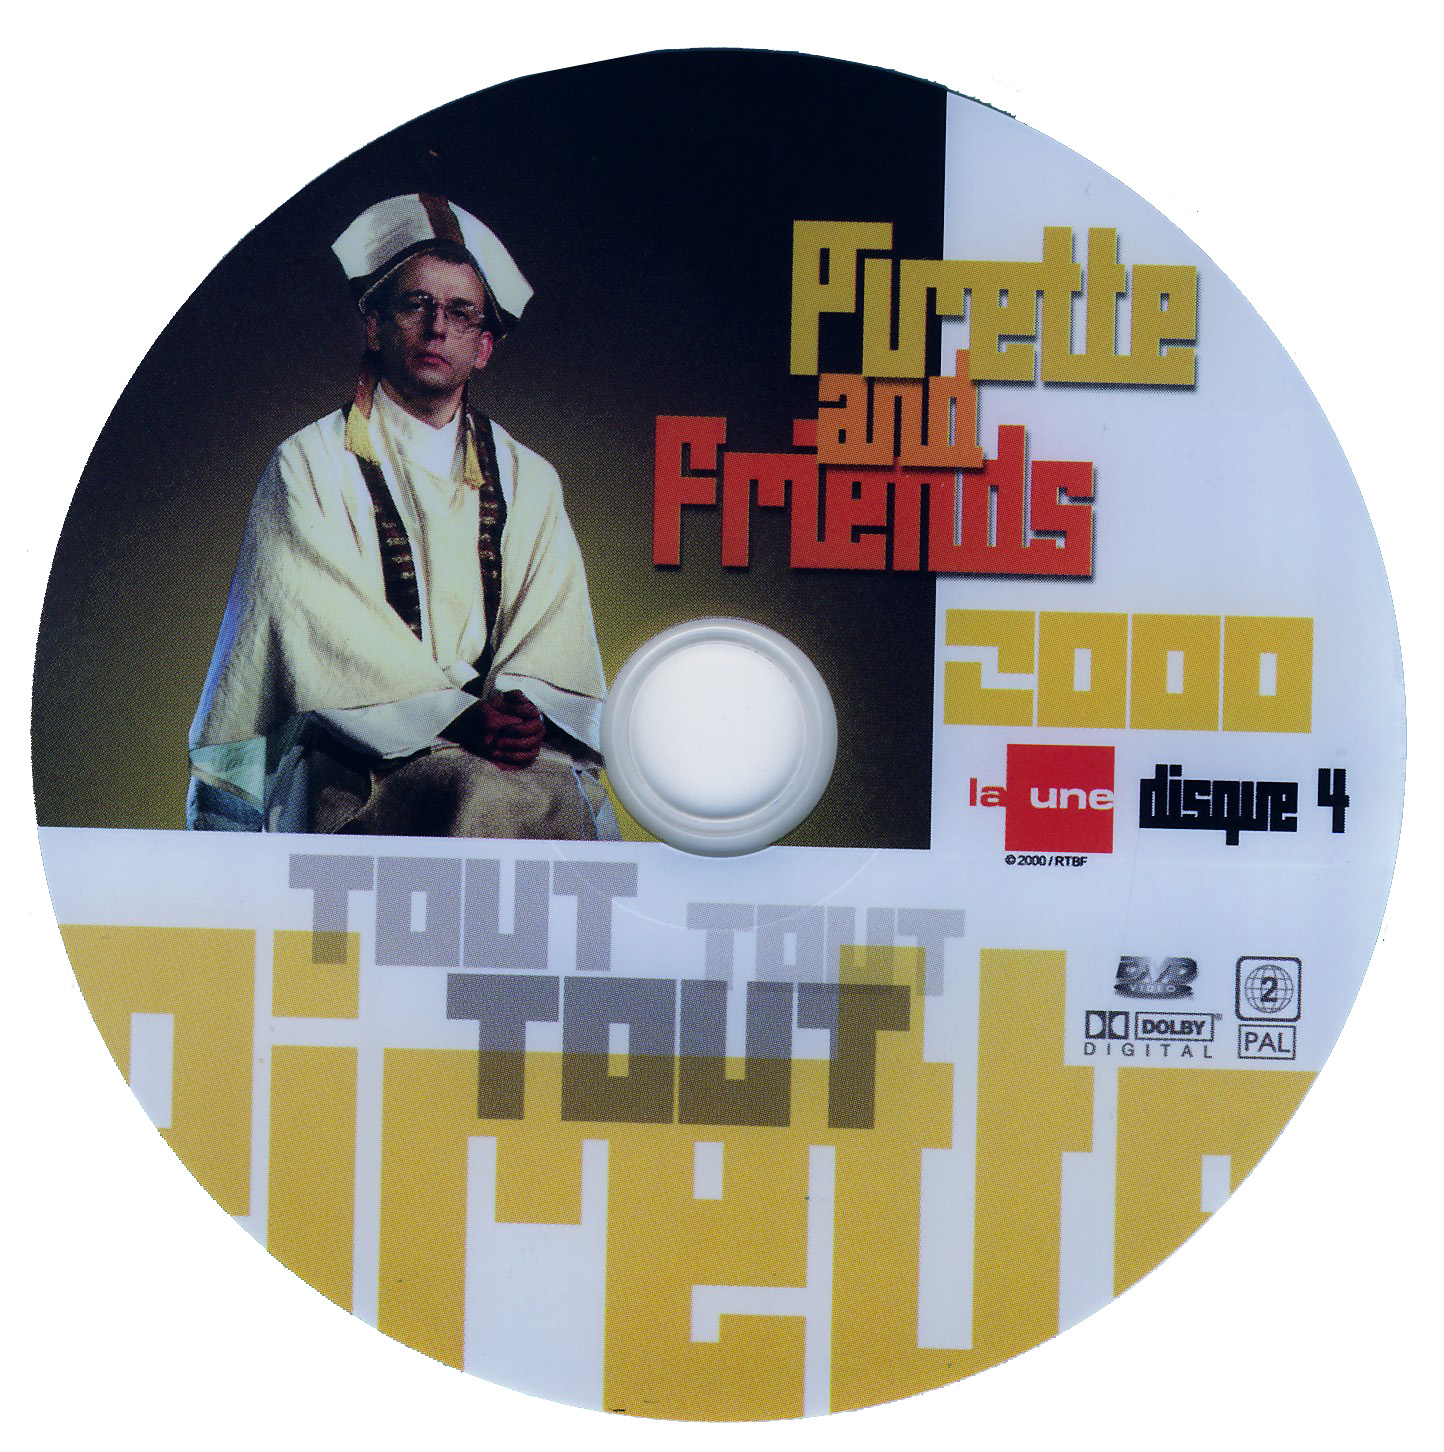 Pirette - Intgrale DISC 04 Pirette and friends